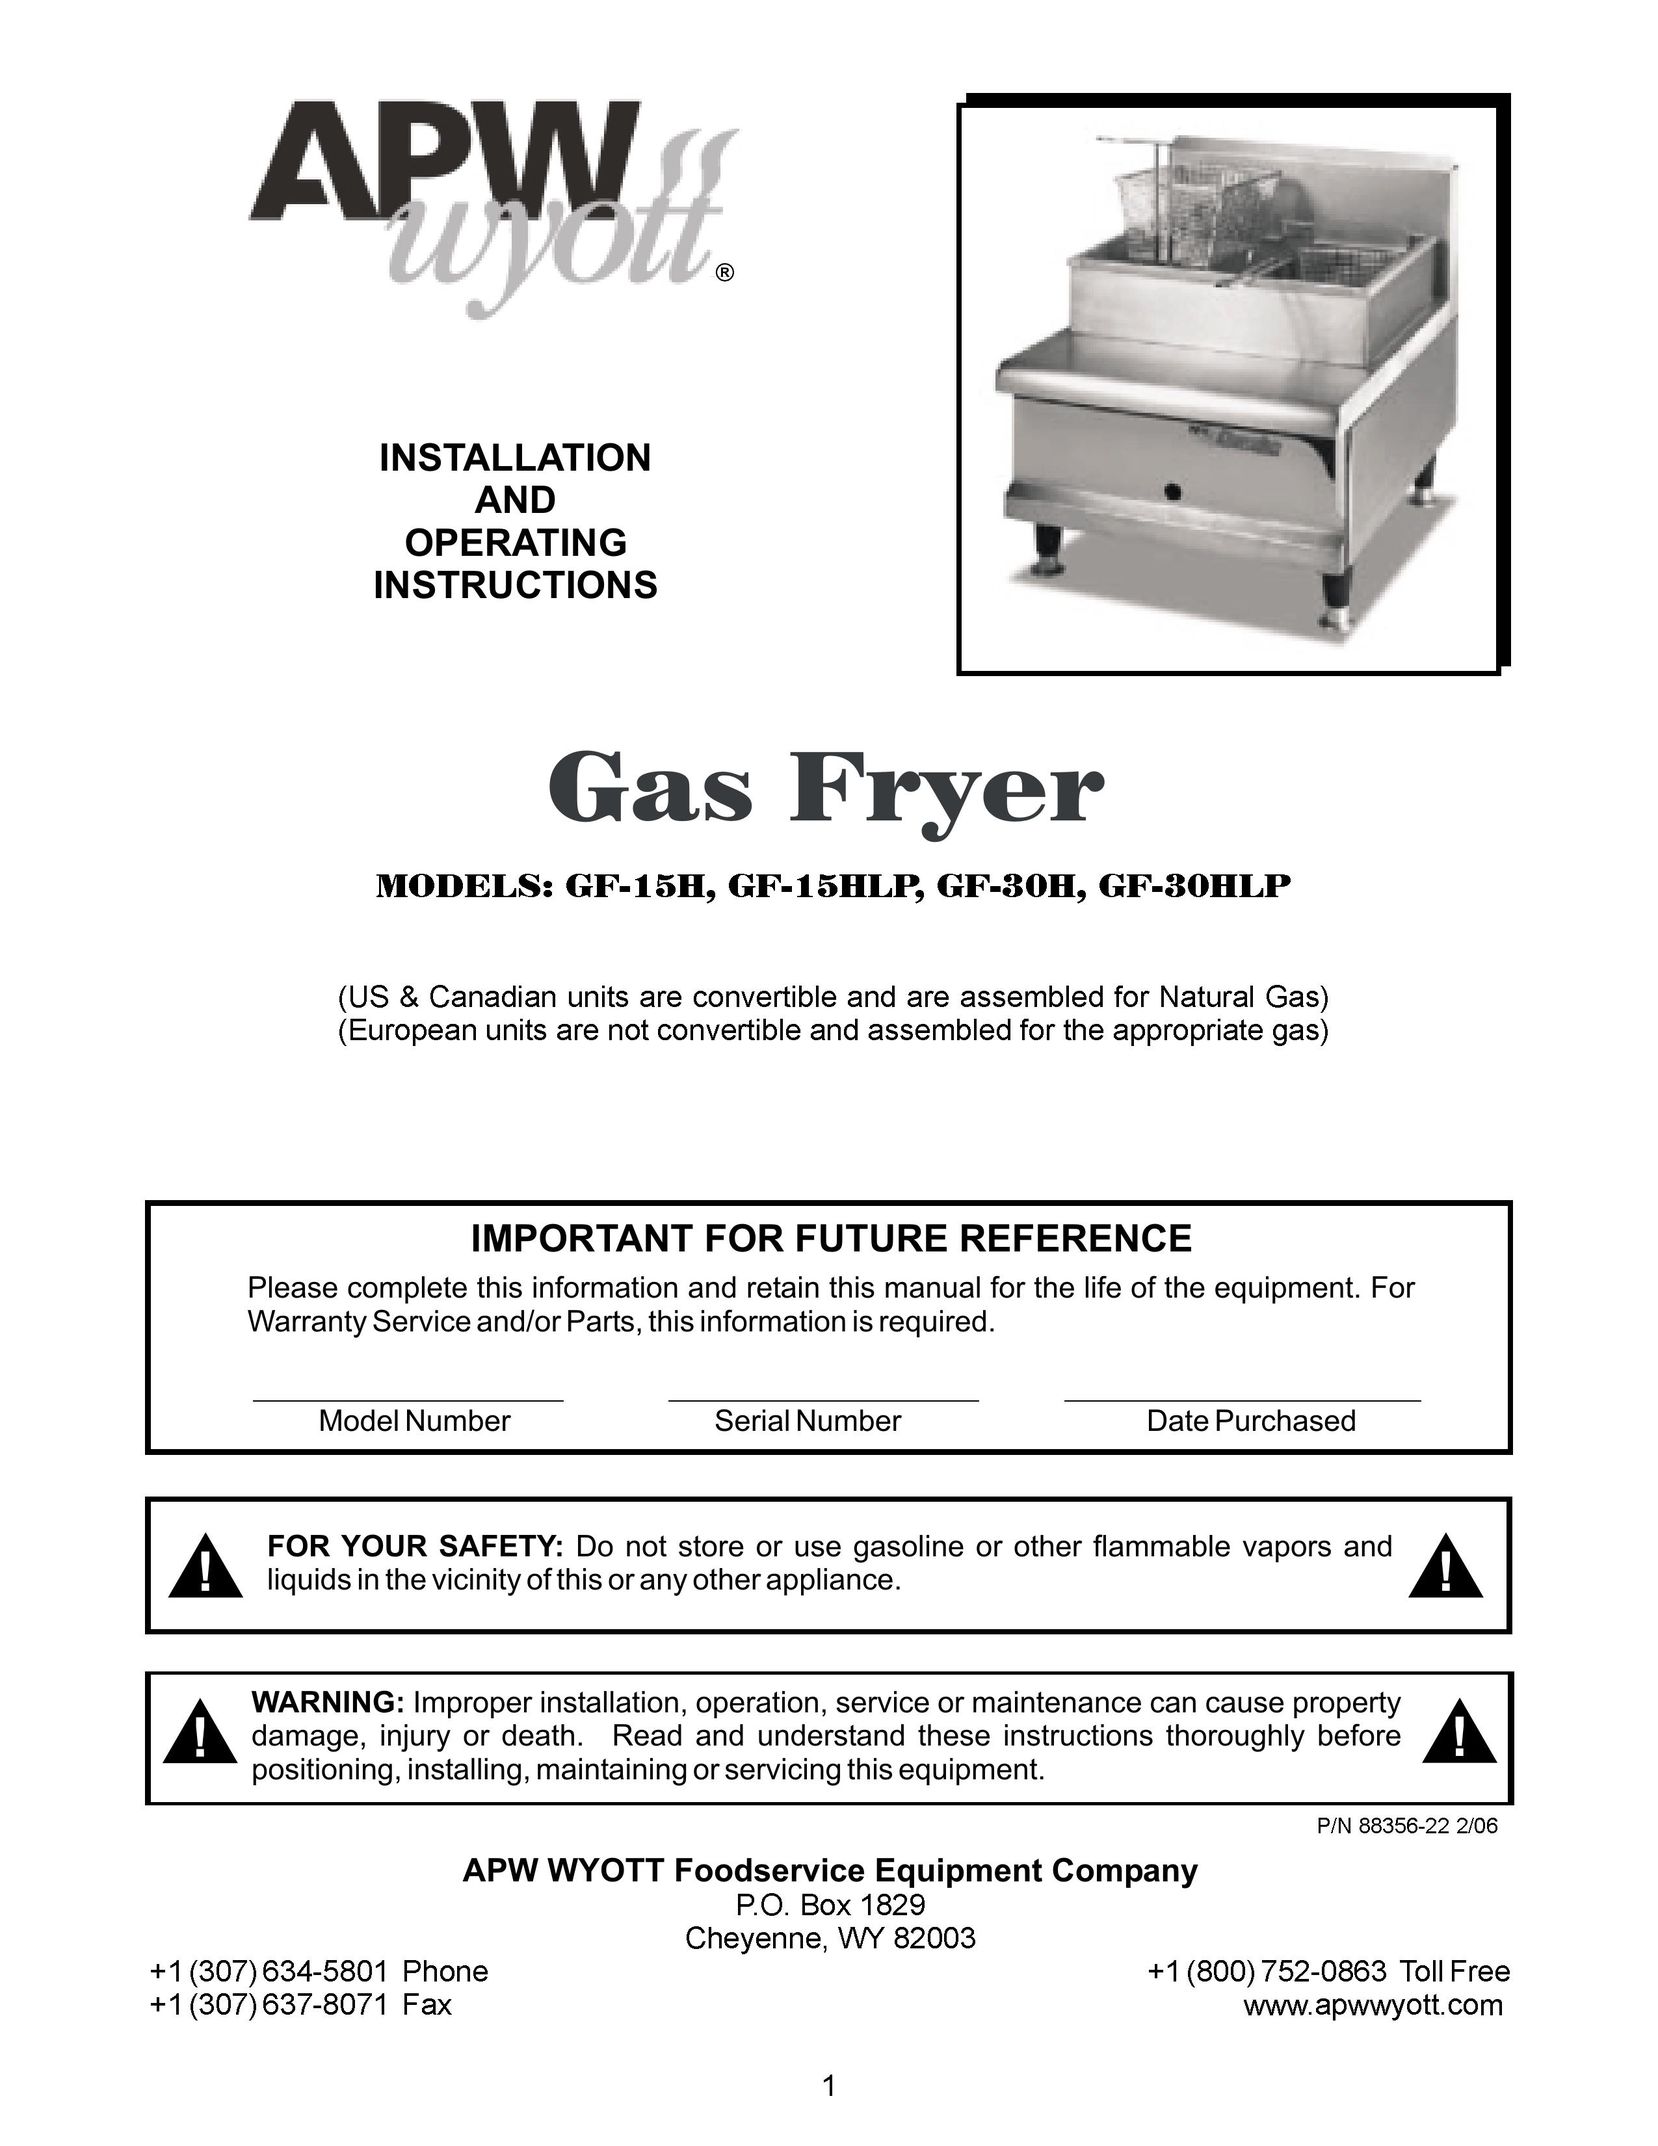 APW Wyott GF-30H Fryer User Manual